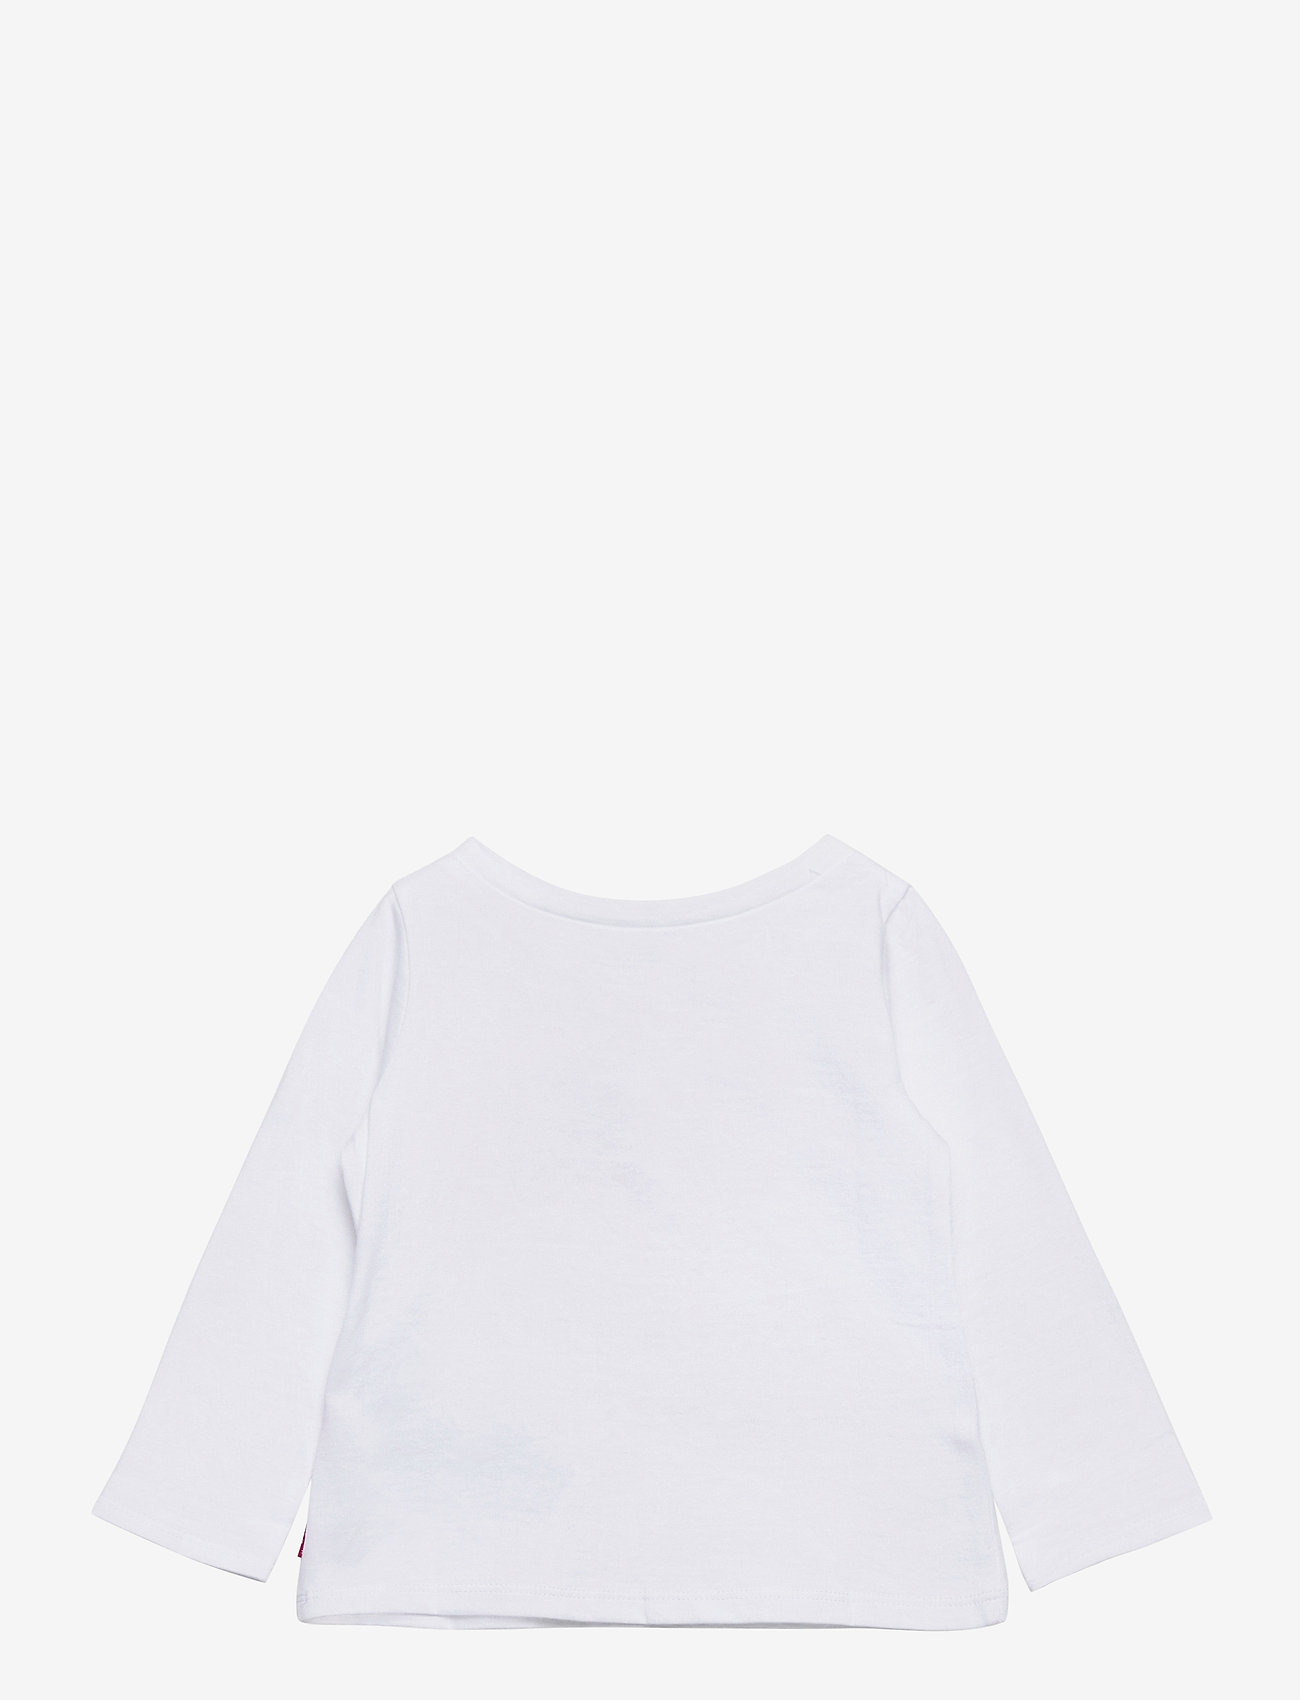 Levi's - LVG LS GRAPHIC TEE - langærmede t-shirts - white - 1